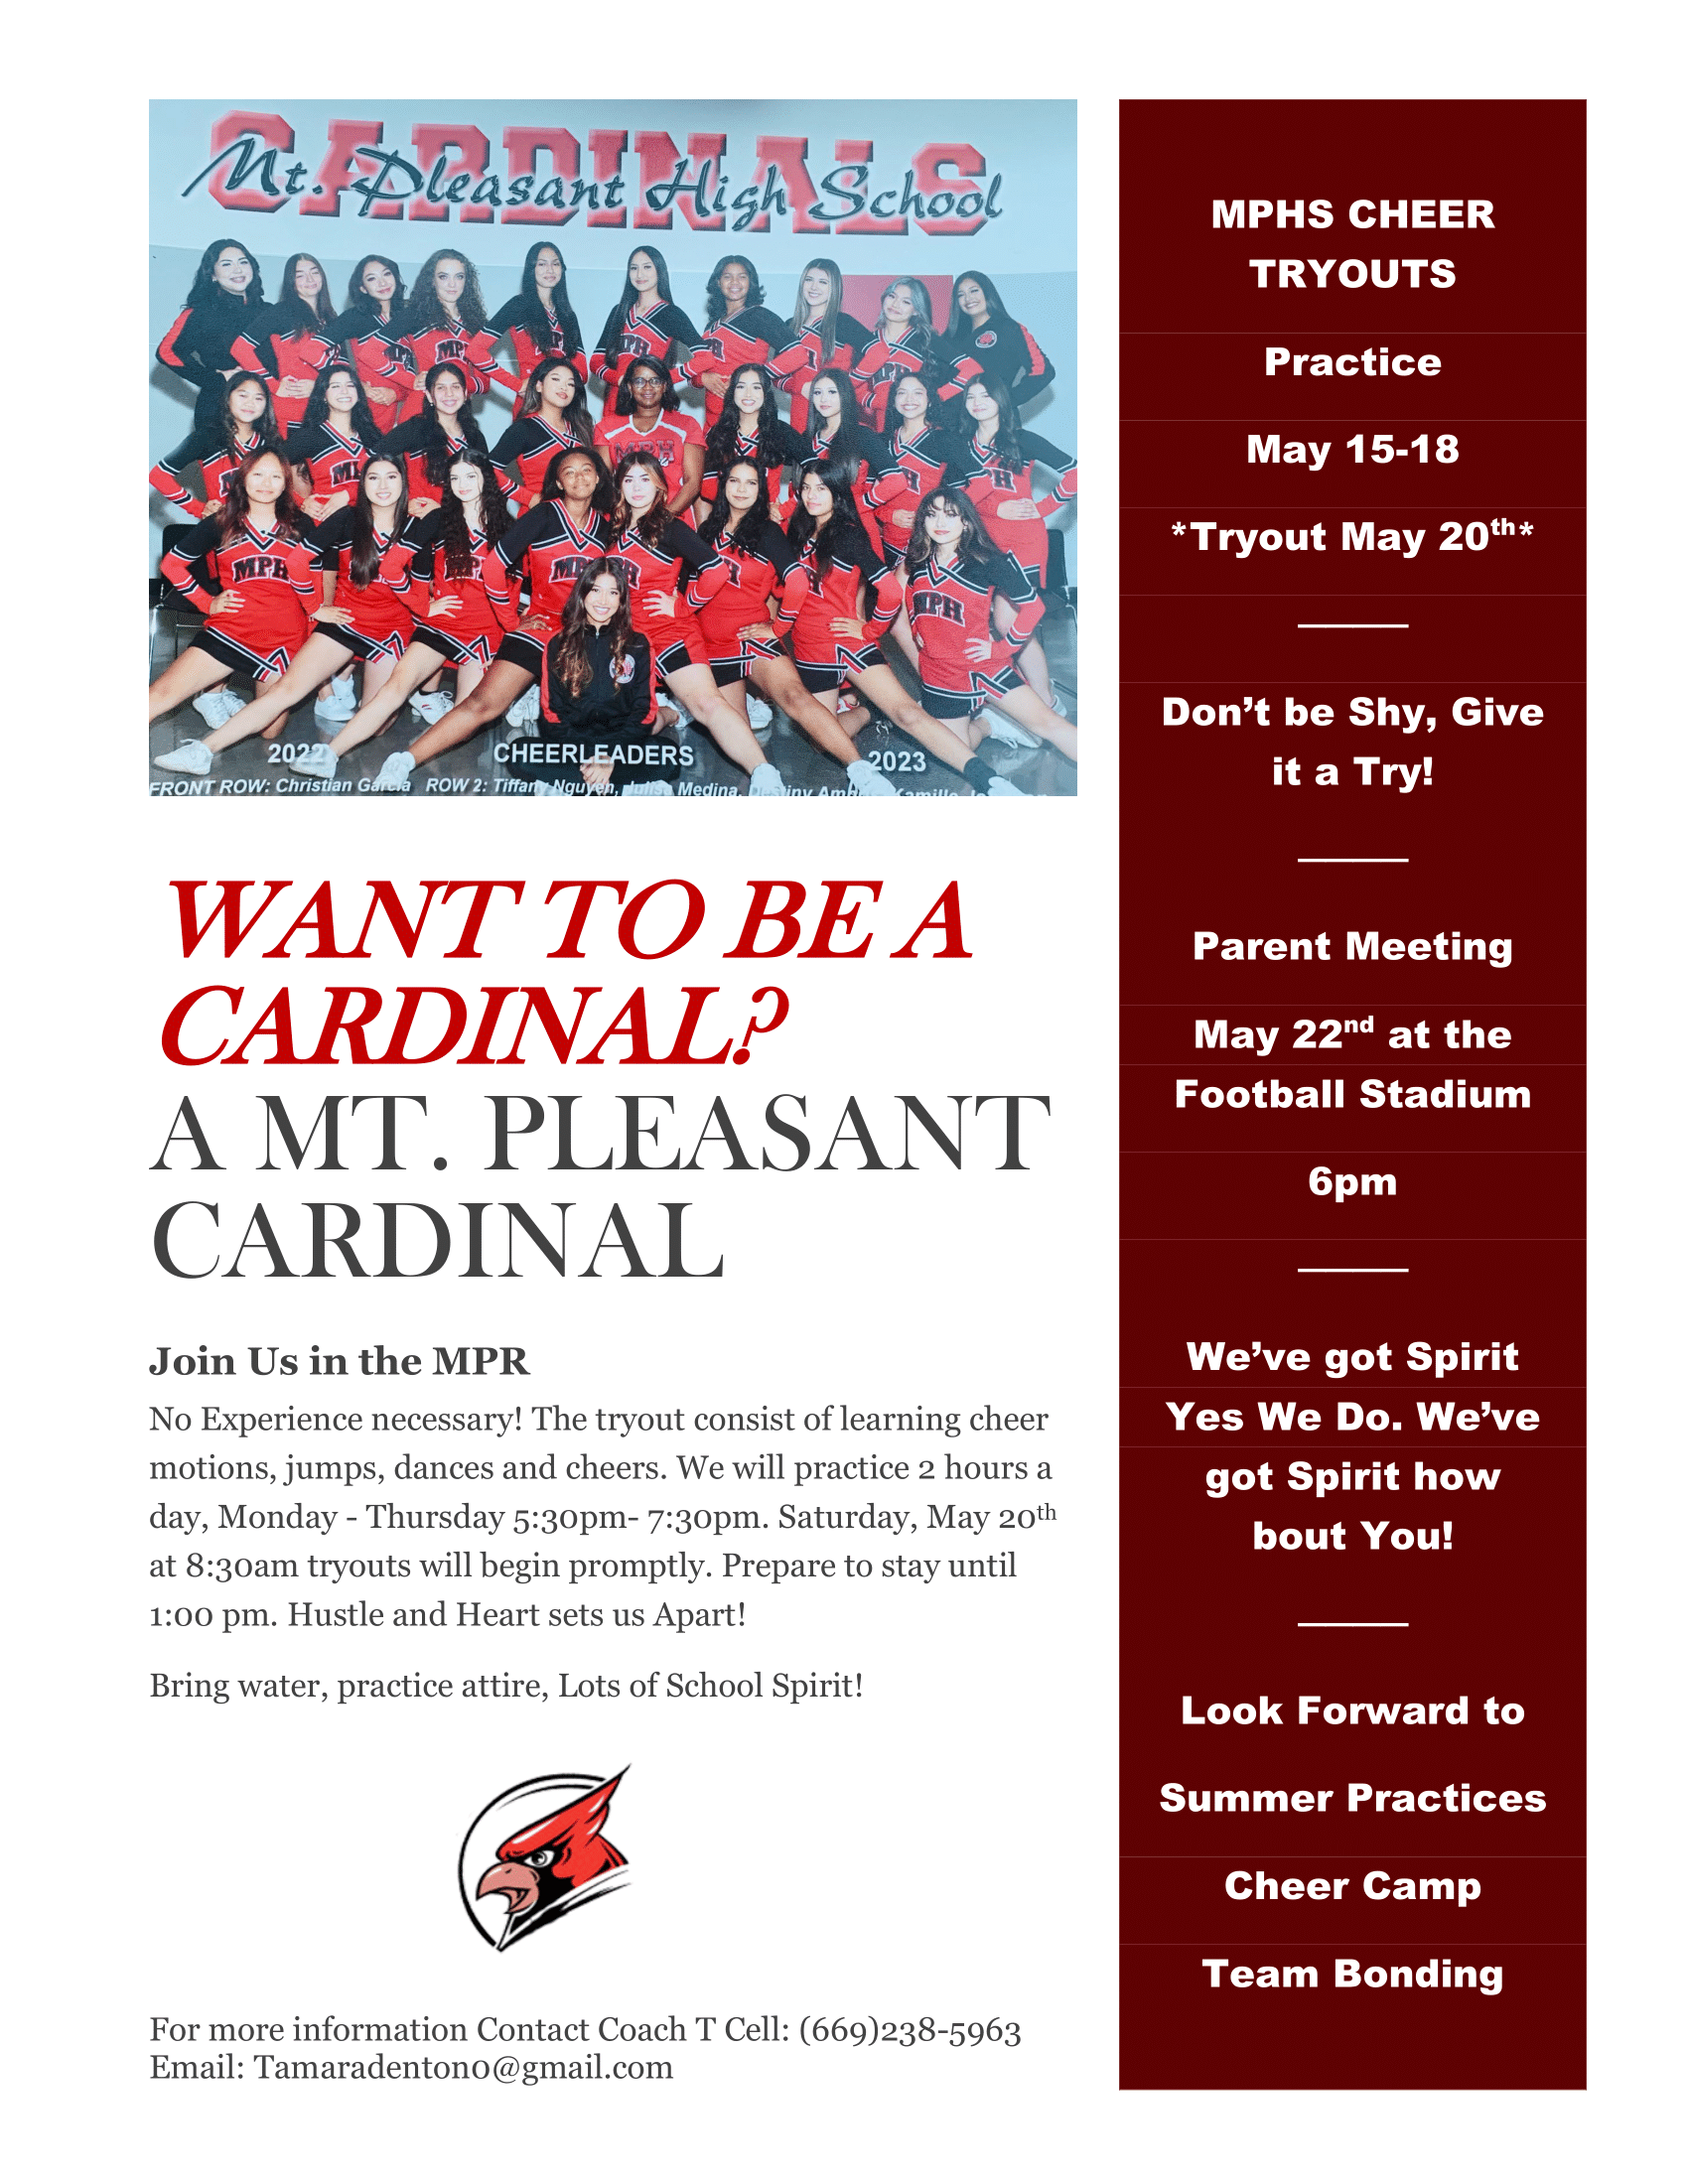 ESUHSD - Mt. Pleasant High School - Cardinal Gear (Store)